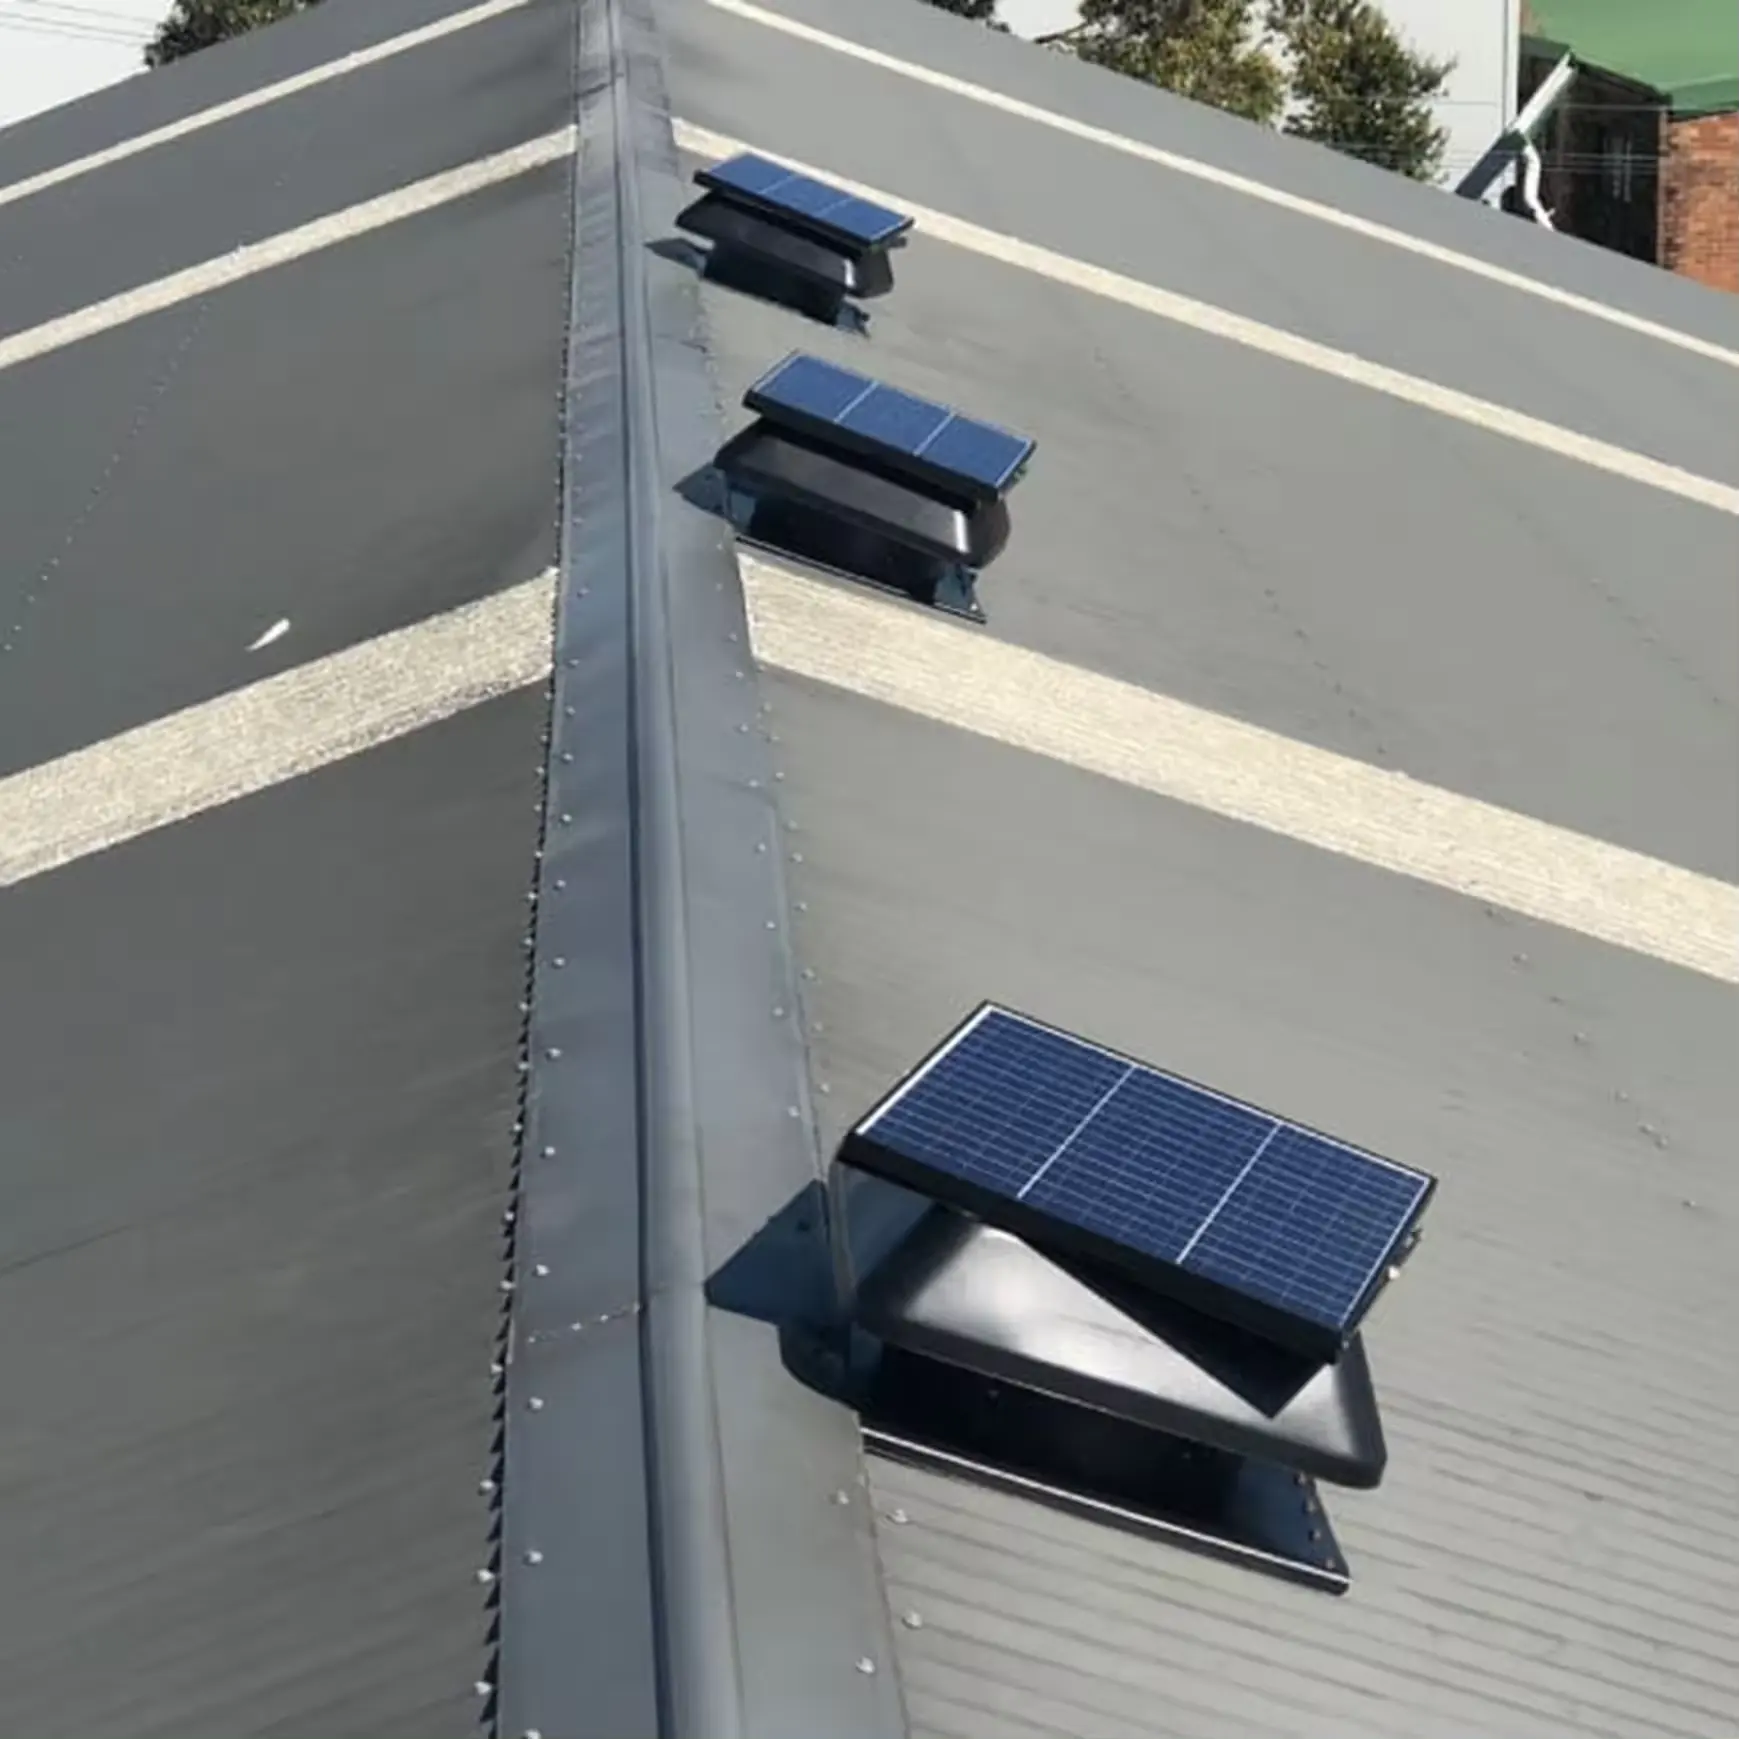 50Wソーラーパネル付き工業用ルーフ屋根裏排気ファンスマートハイブリッドパワーソーラーエネルギー換気関連製品ルーフベントファン